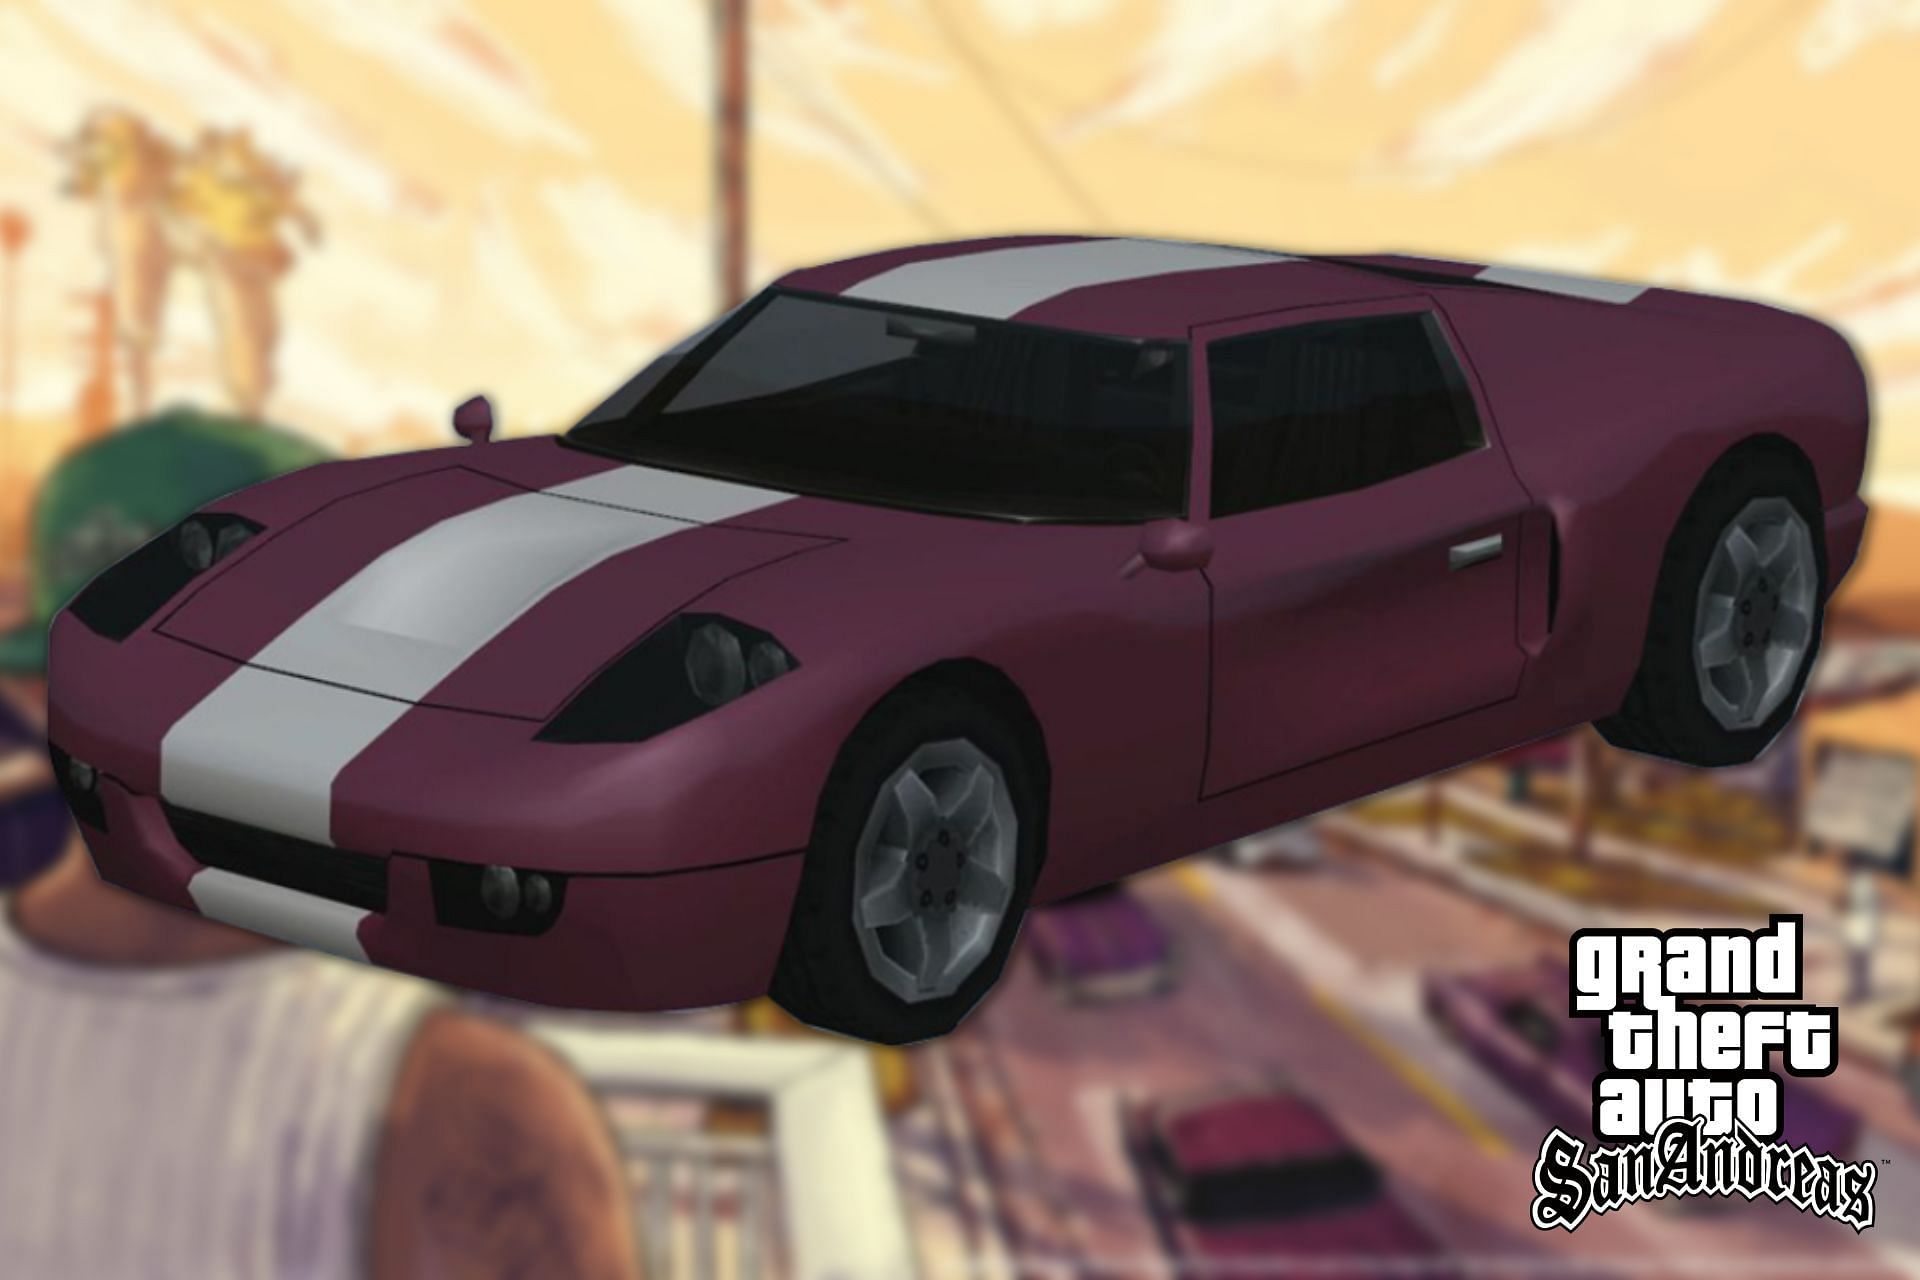 Best looking cars from GTA San Andreas Definitive Editon (Image via Sporstskeeda)